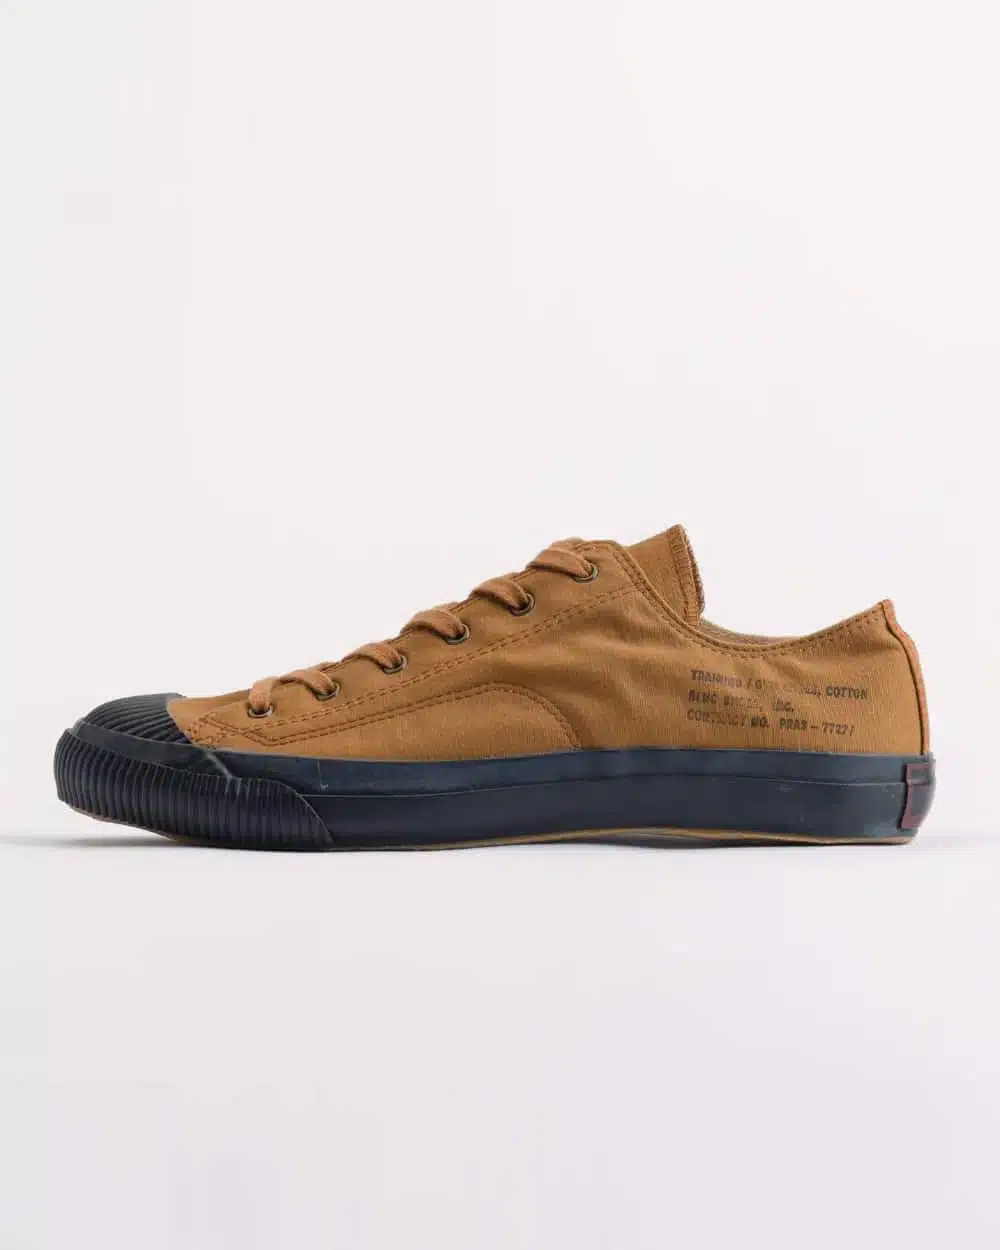 PRAS Shellcap Low Sneakers - Brown /Black